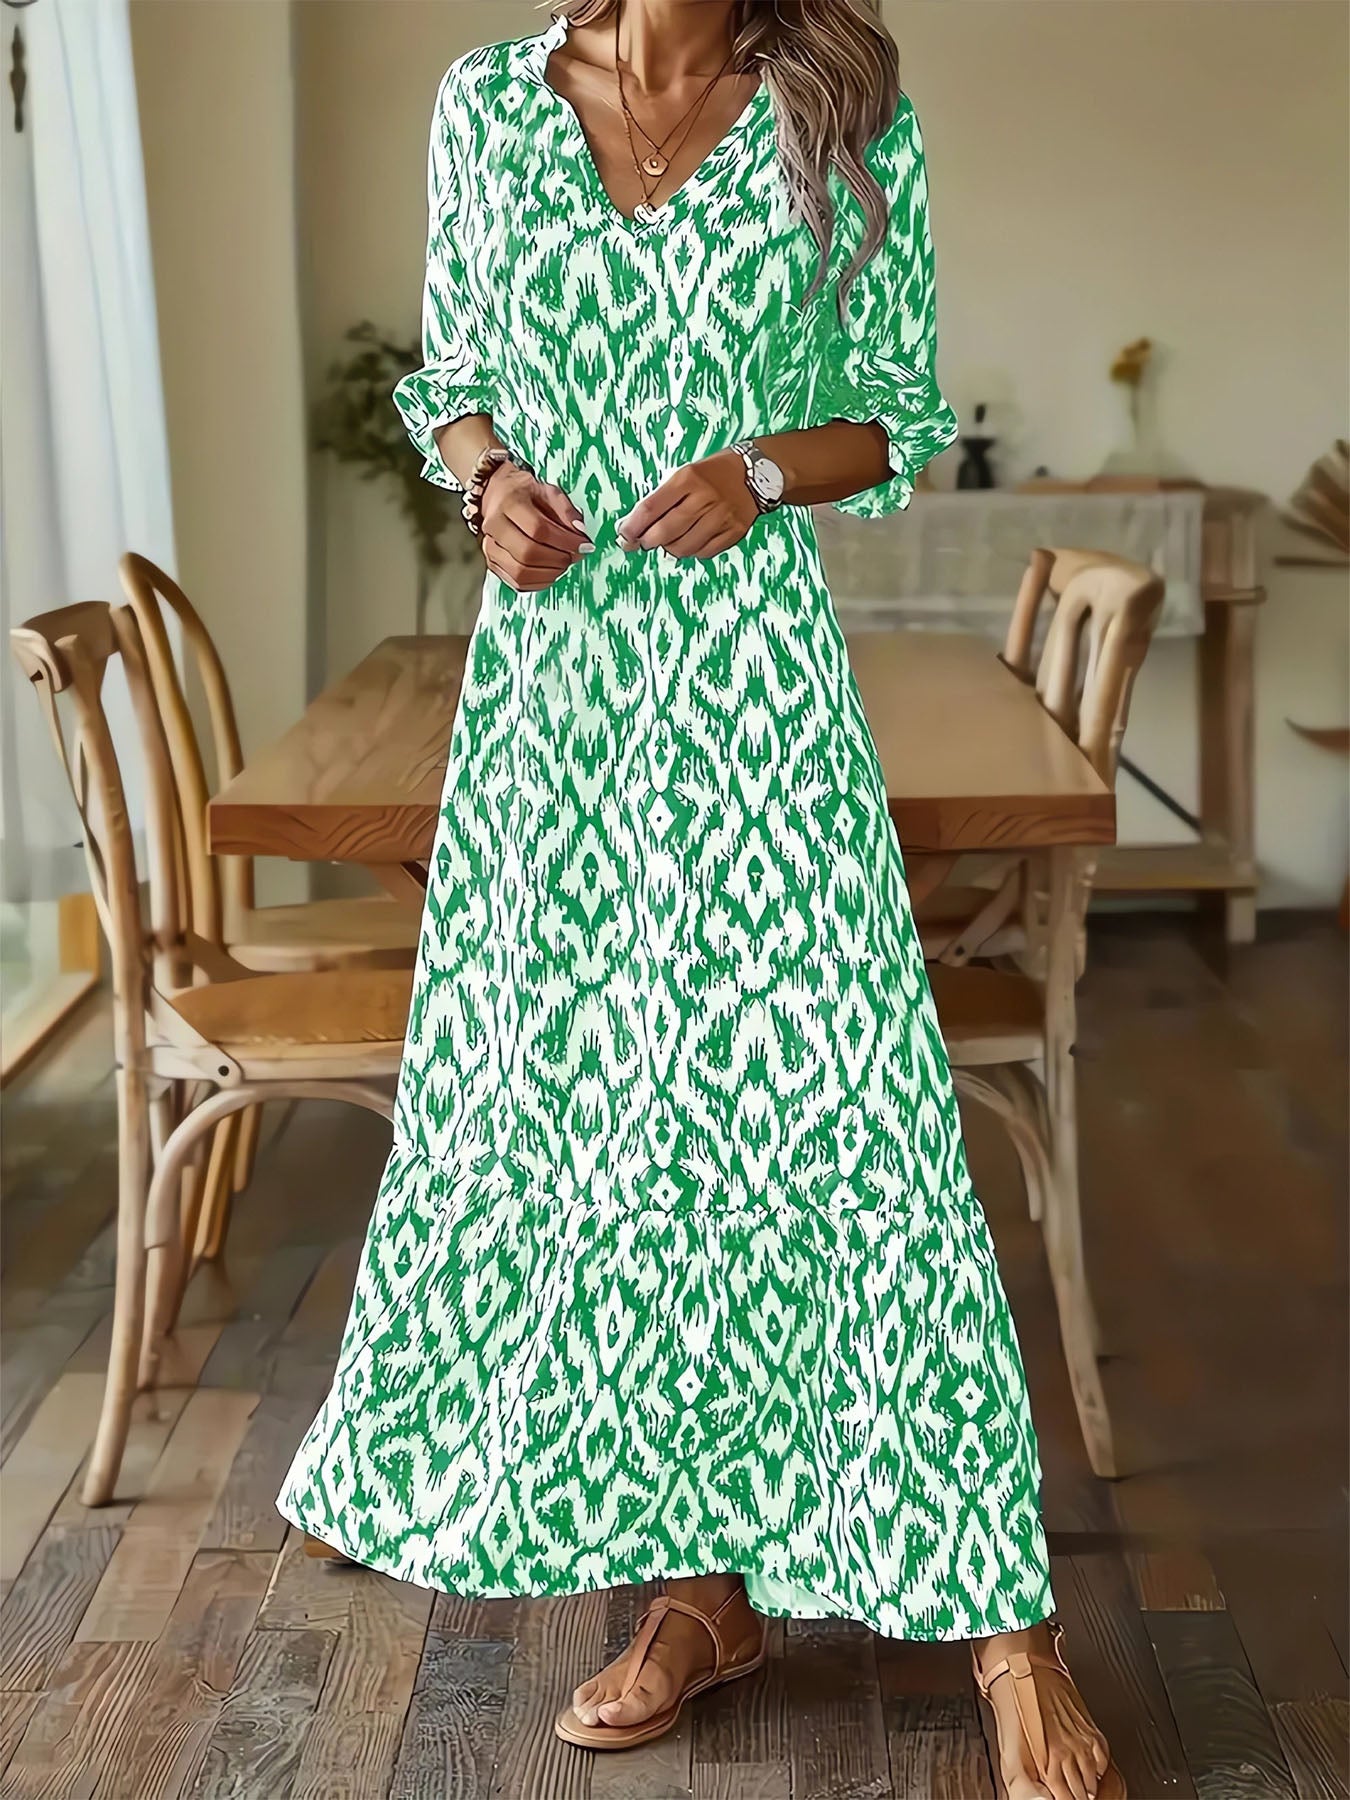 Vorioal Casual Fashion Green Dress